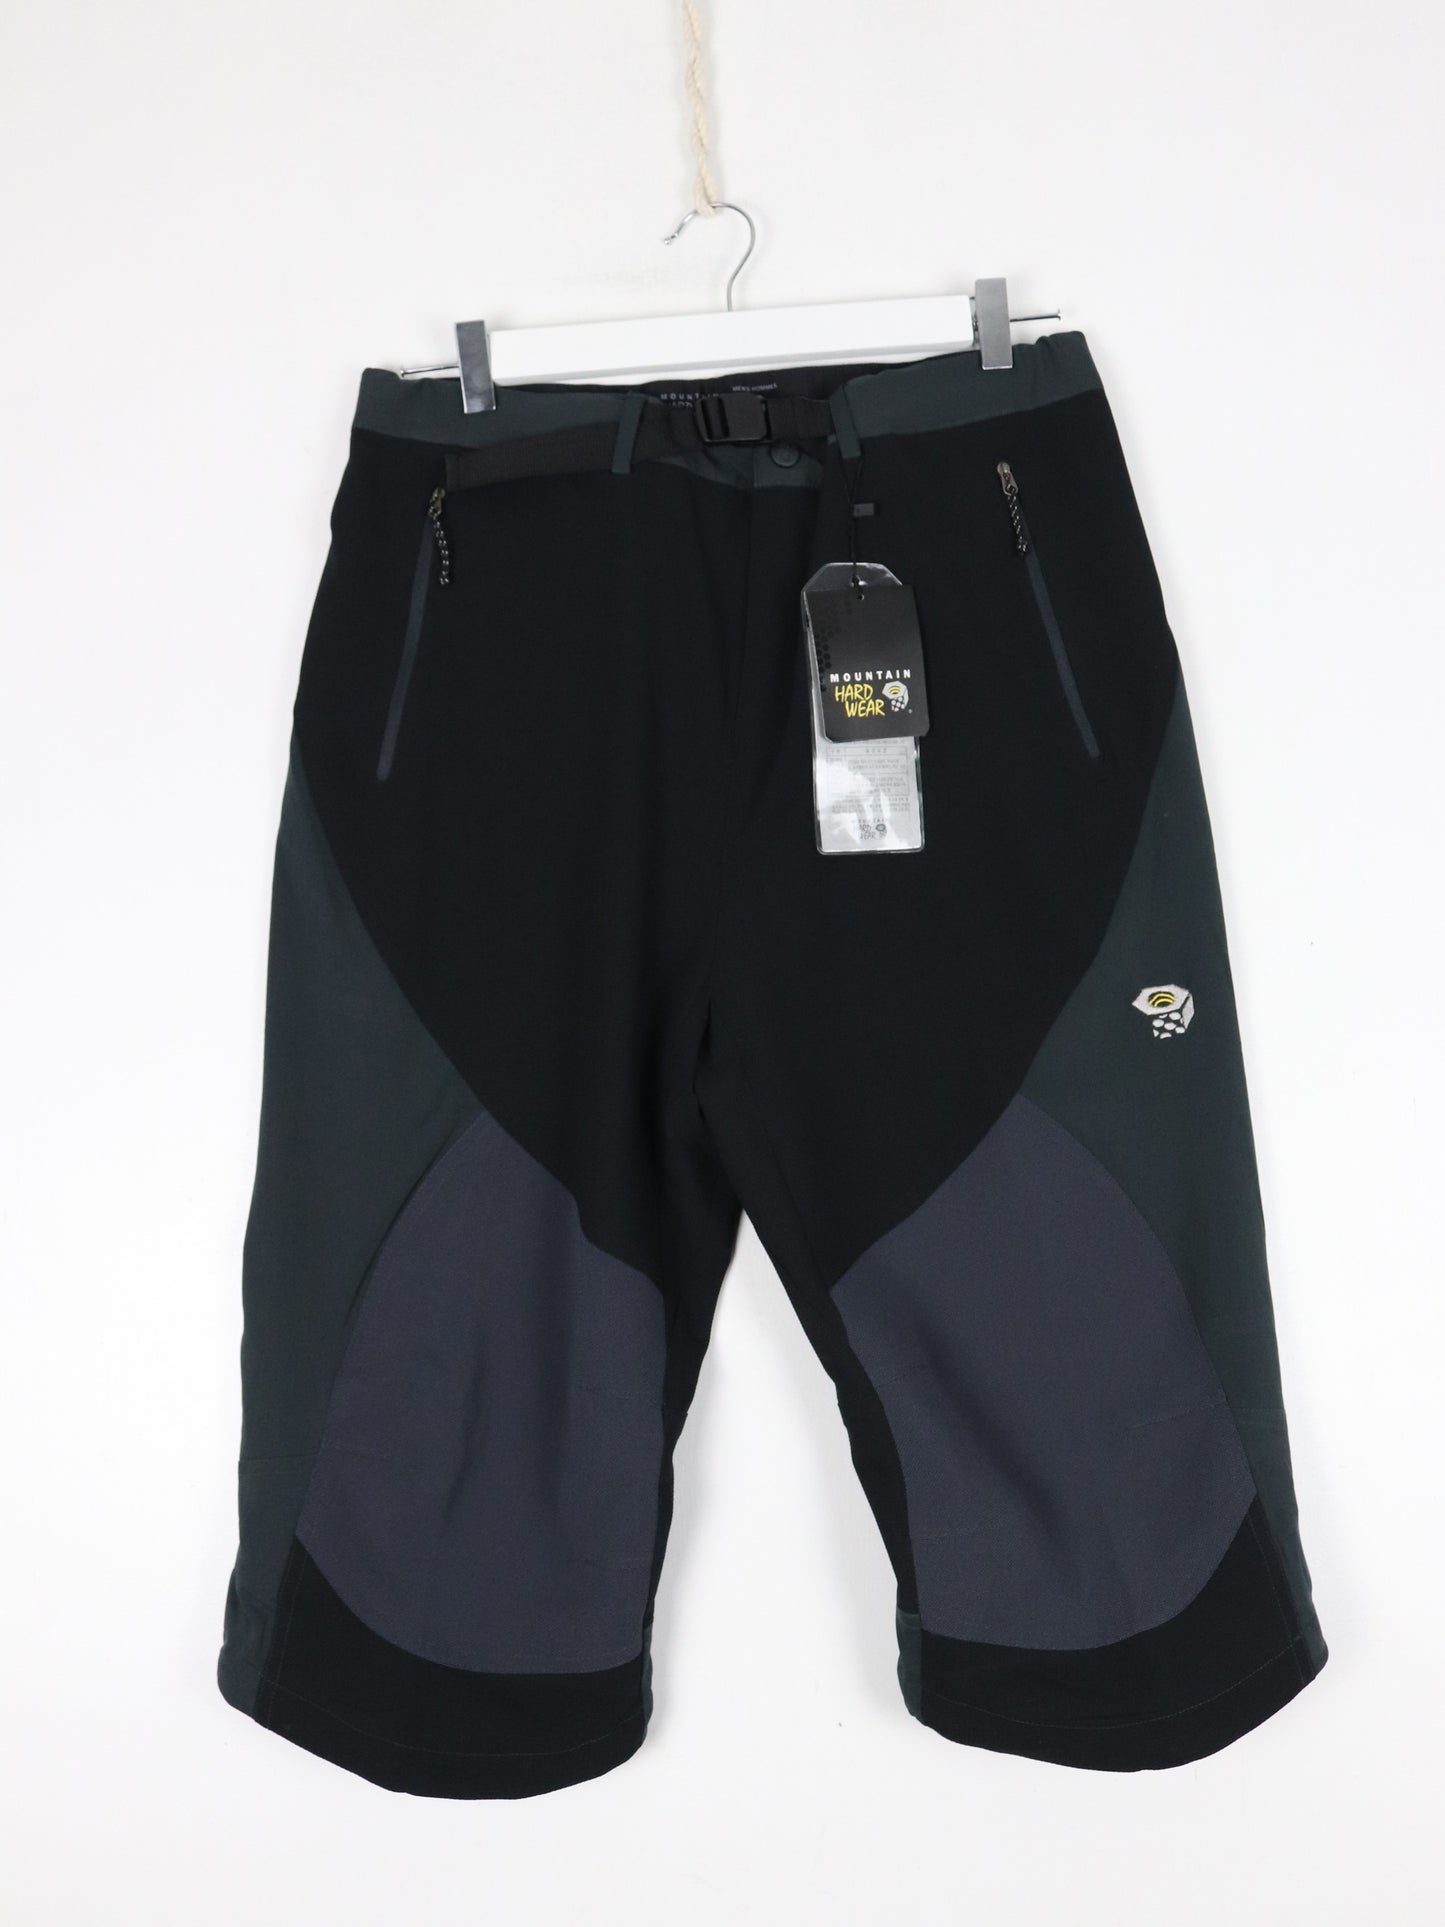 Mountain Hardwear Shorts 3/4 Length Mens Large Black Hiking Outdoors